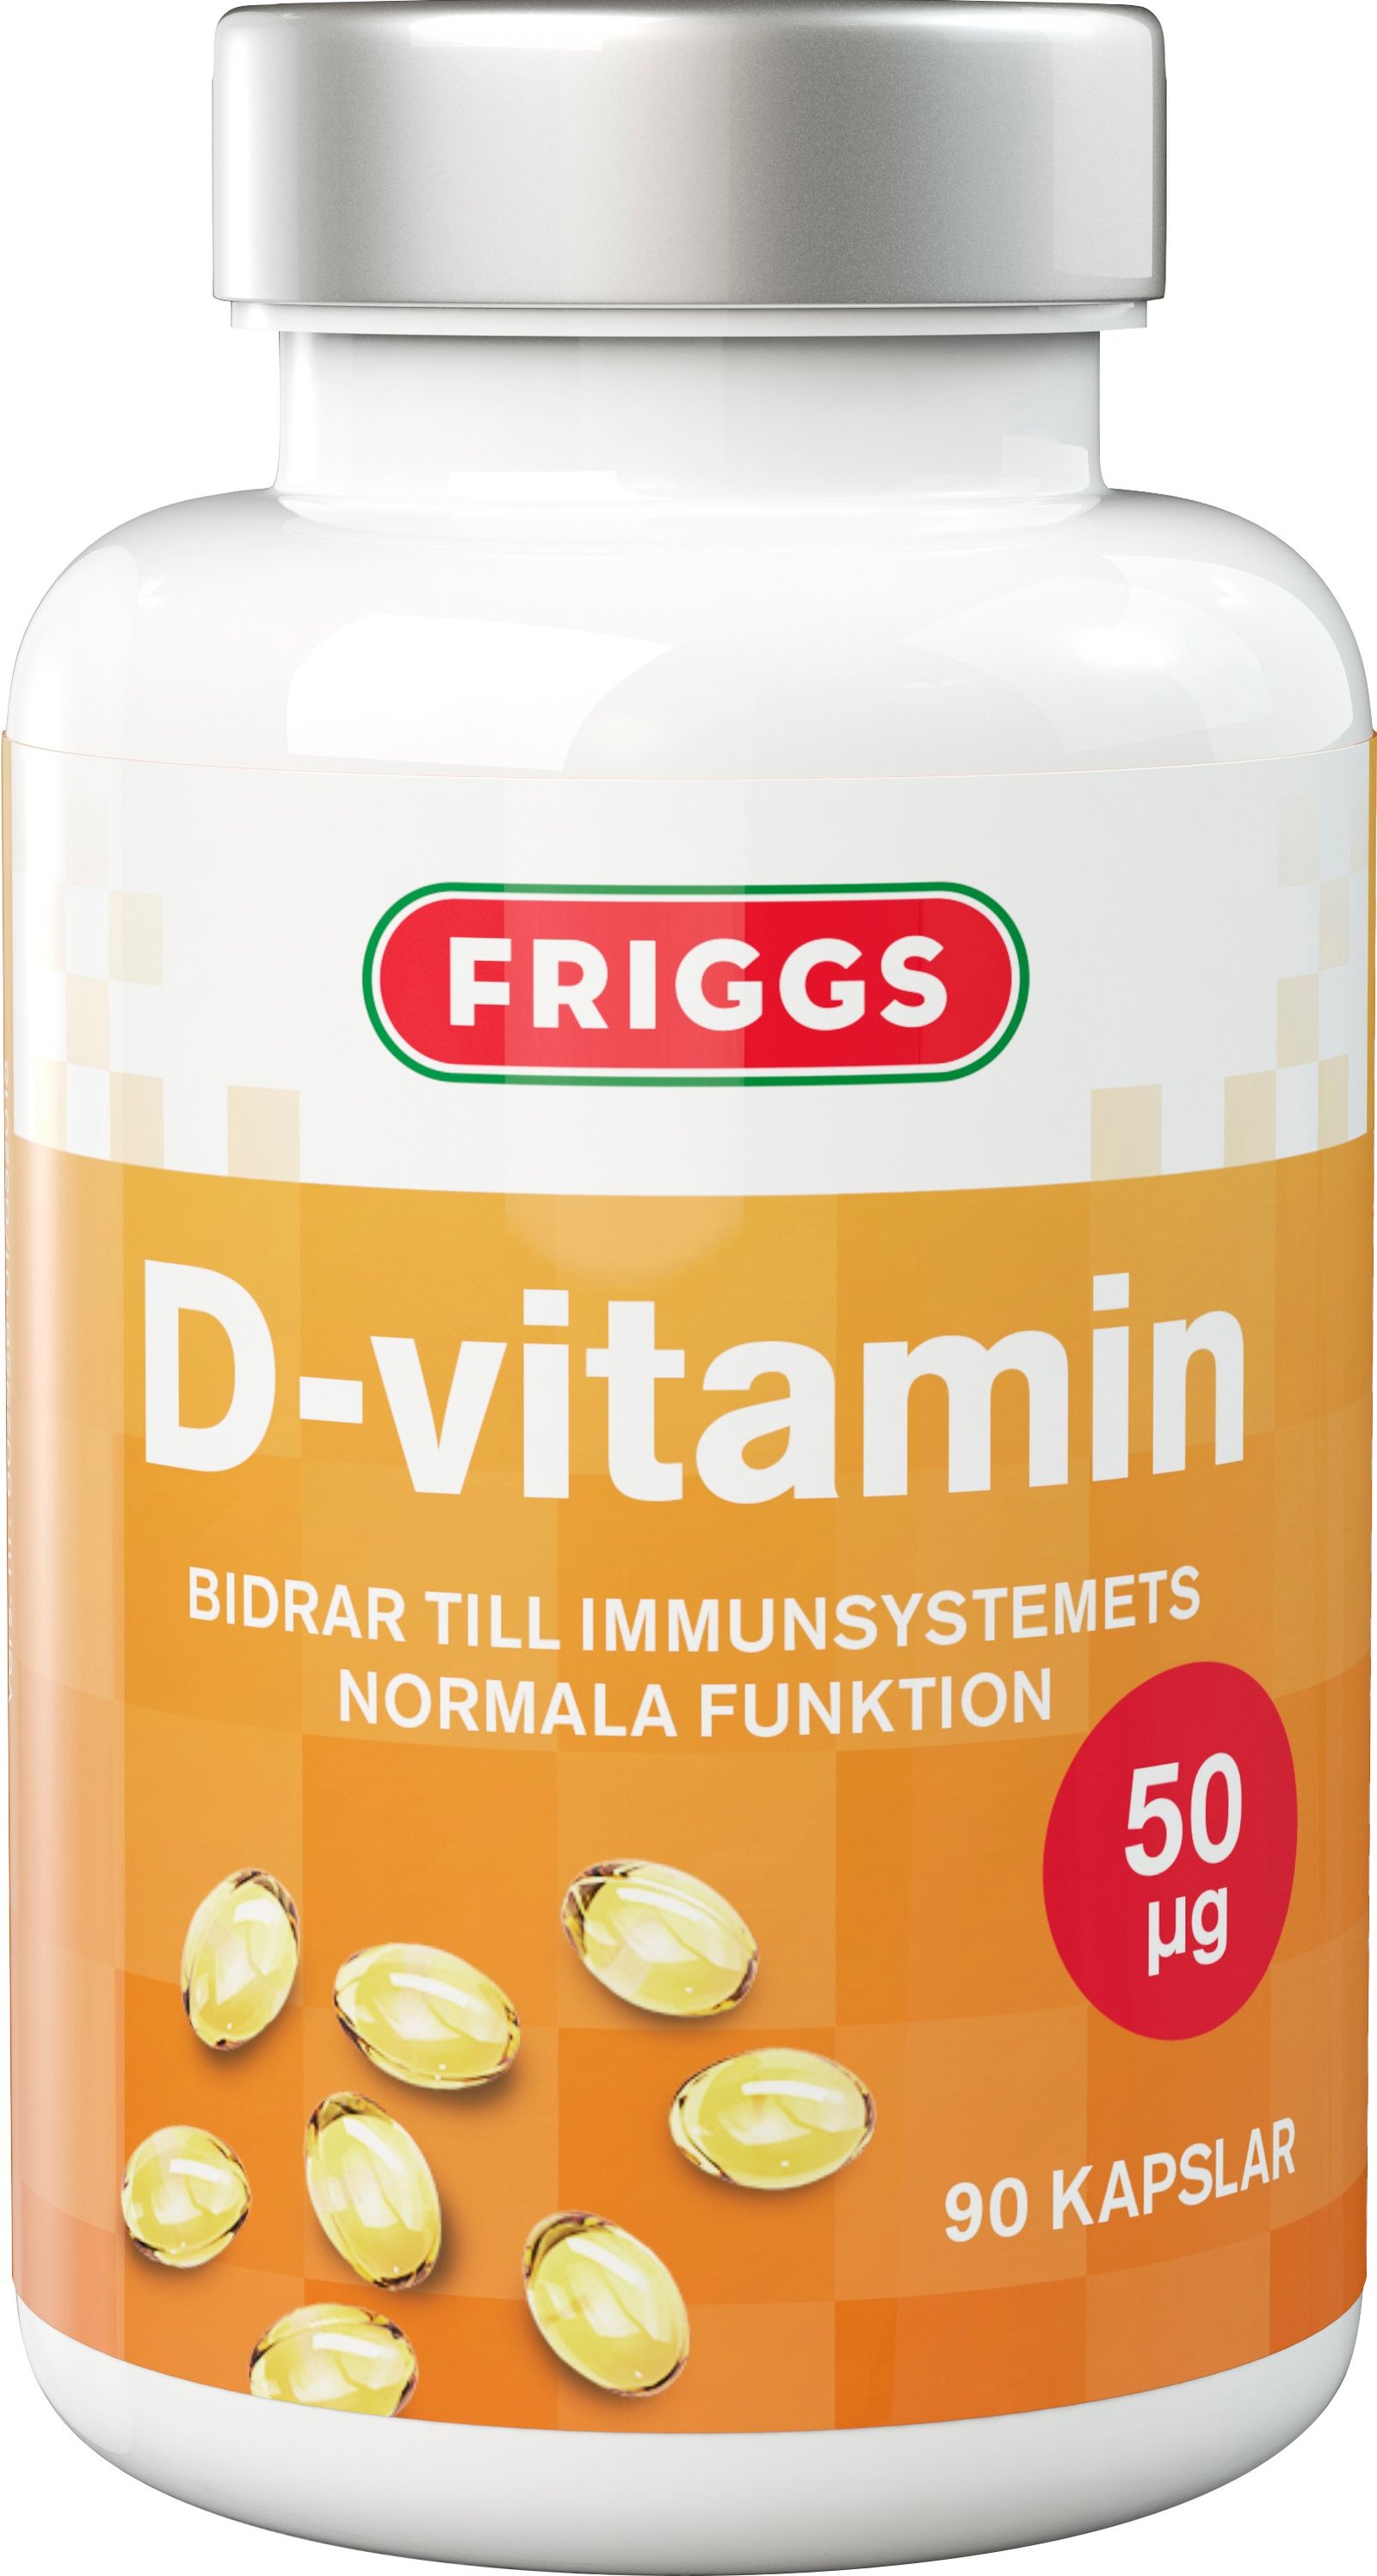 Friggs D-vitamin 50 µg 90 kapslar